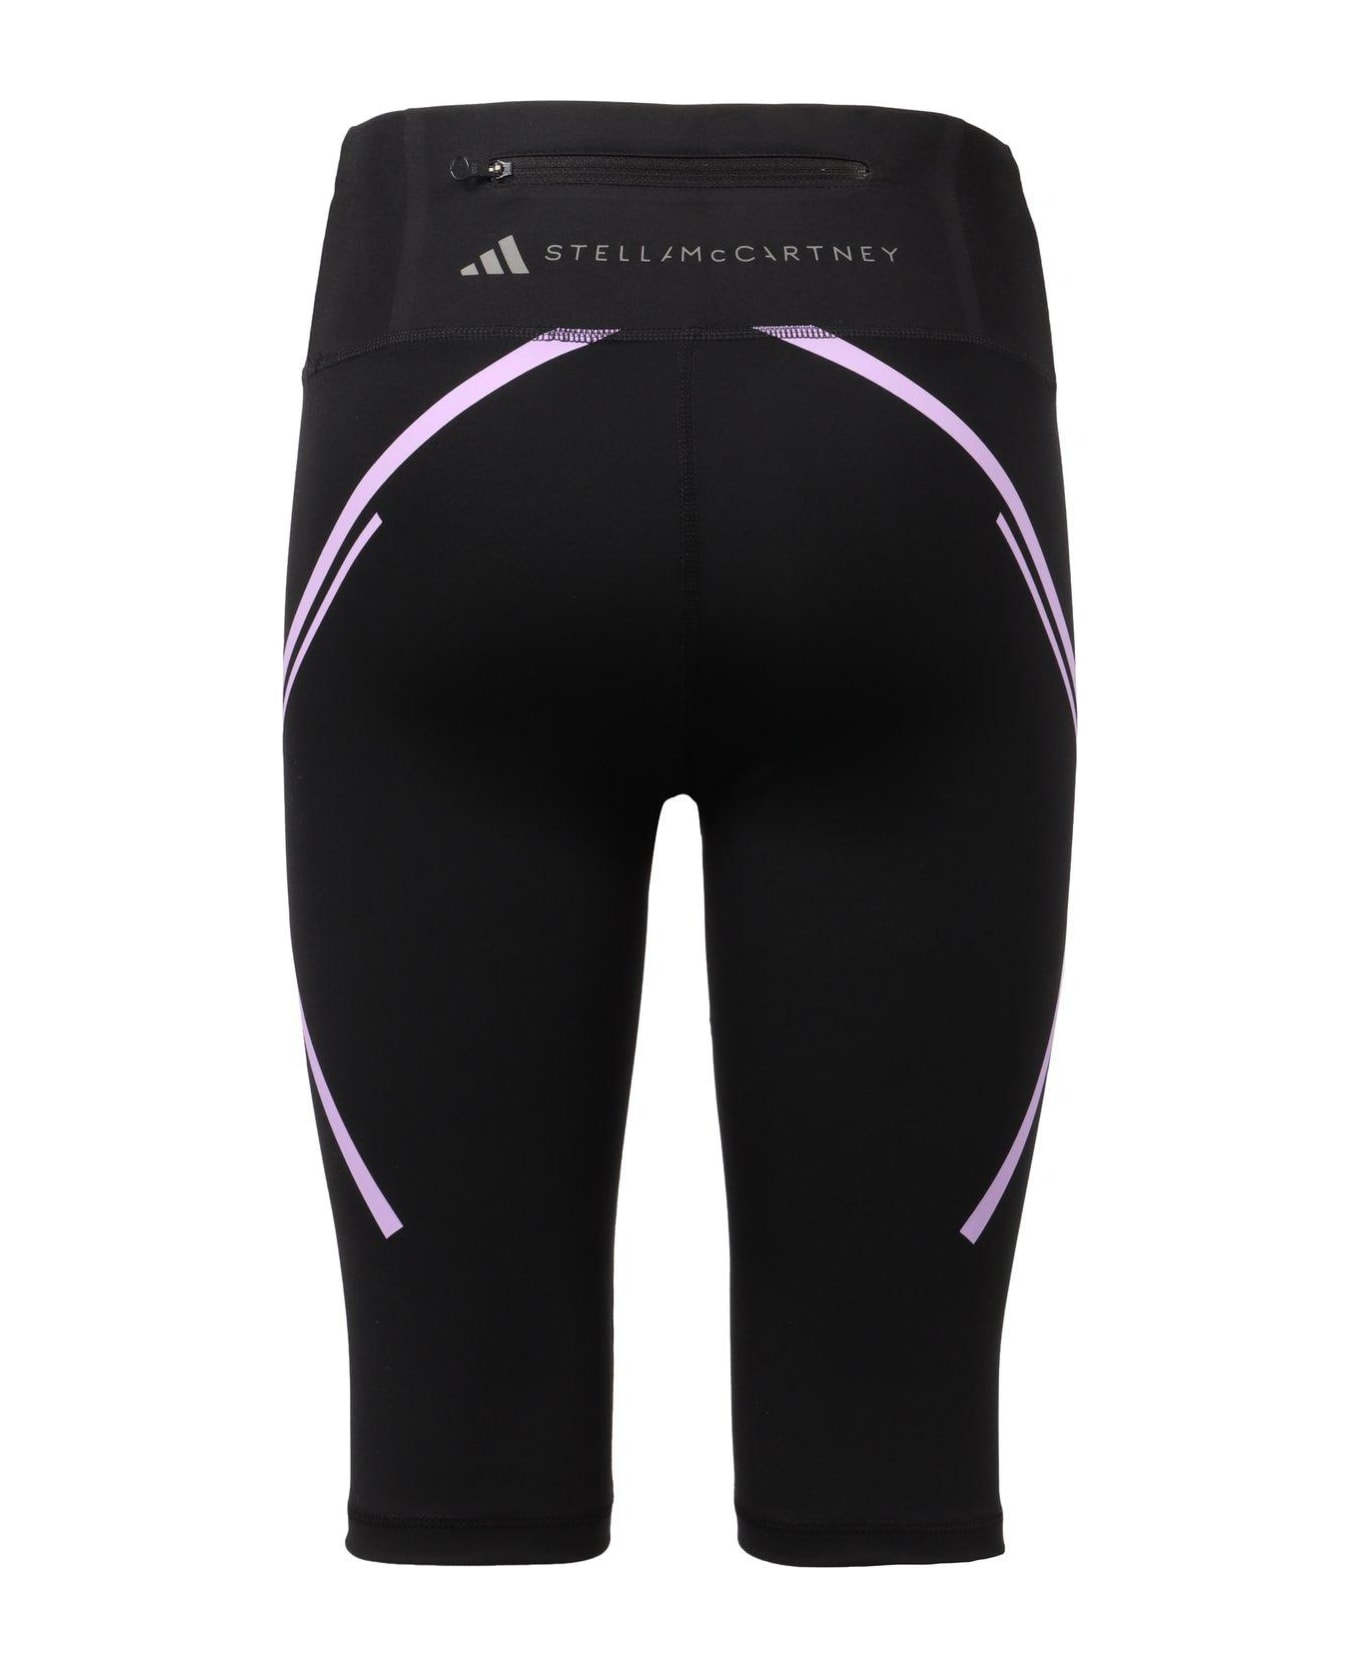 Adidas by Stella McCartney Truepace High-waisted Cycling Shorts - Black Purple ショートパンツ